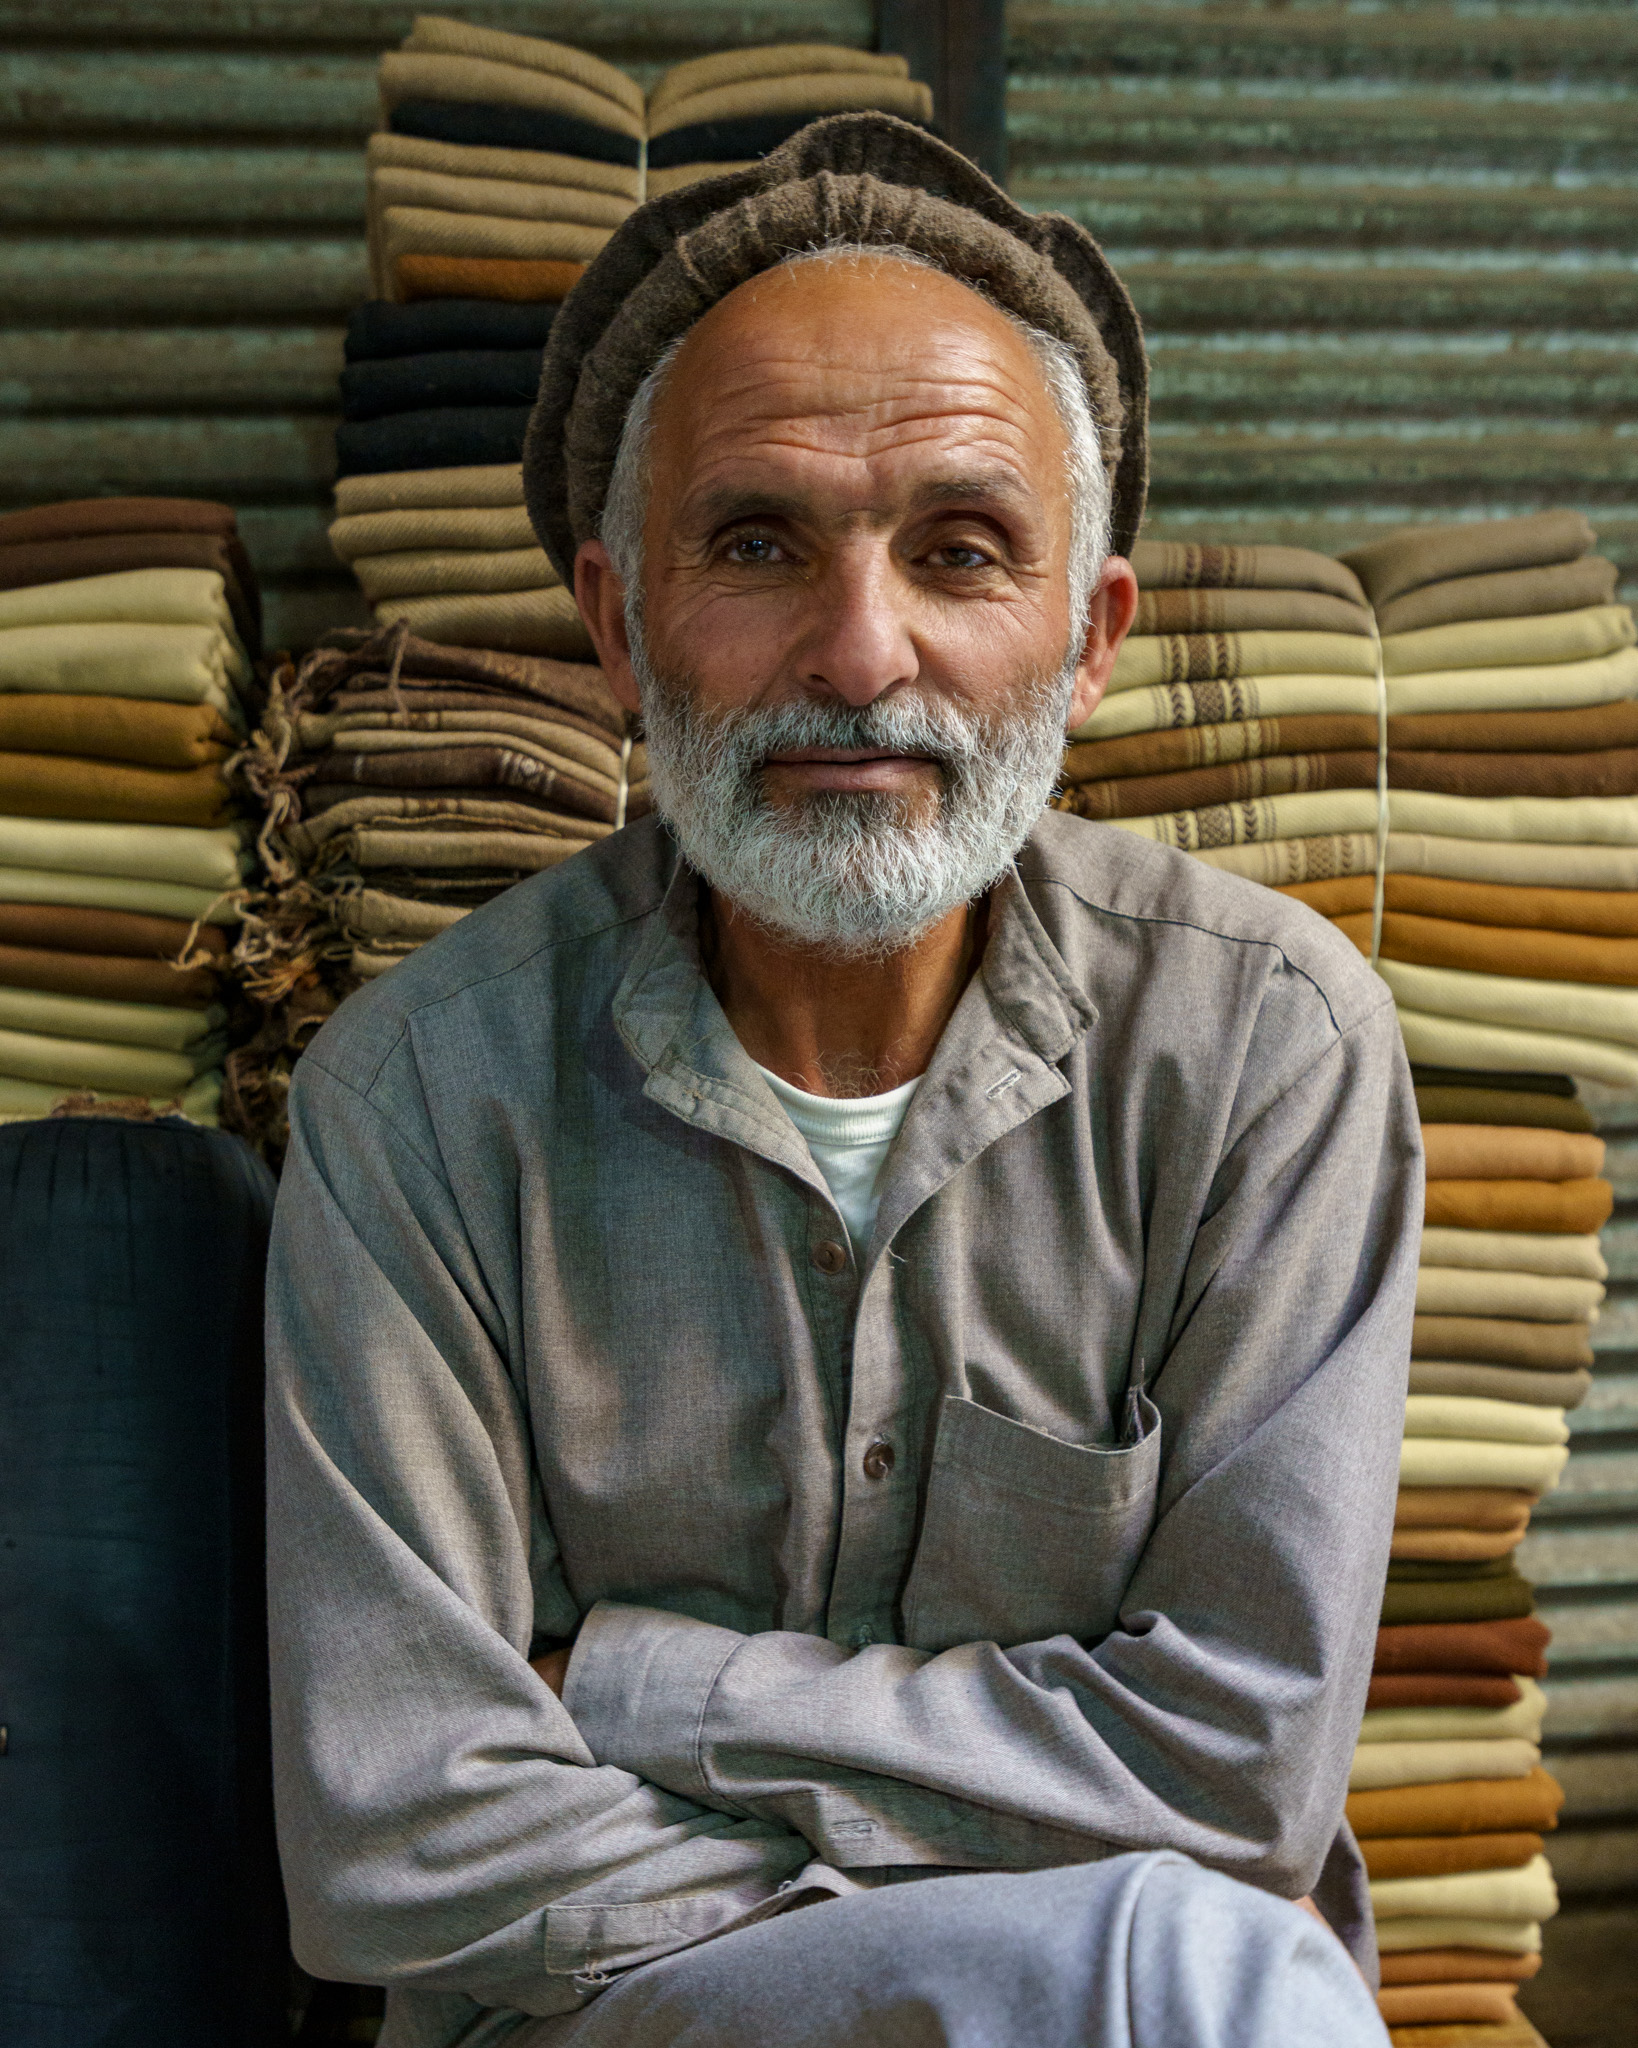 Friendly Afghan man in Kabul